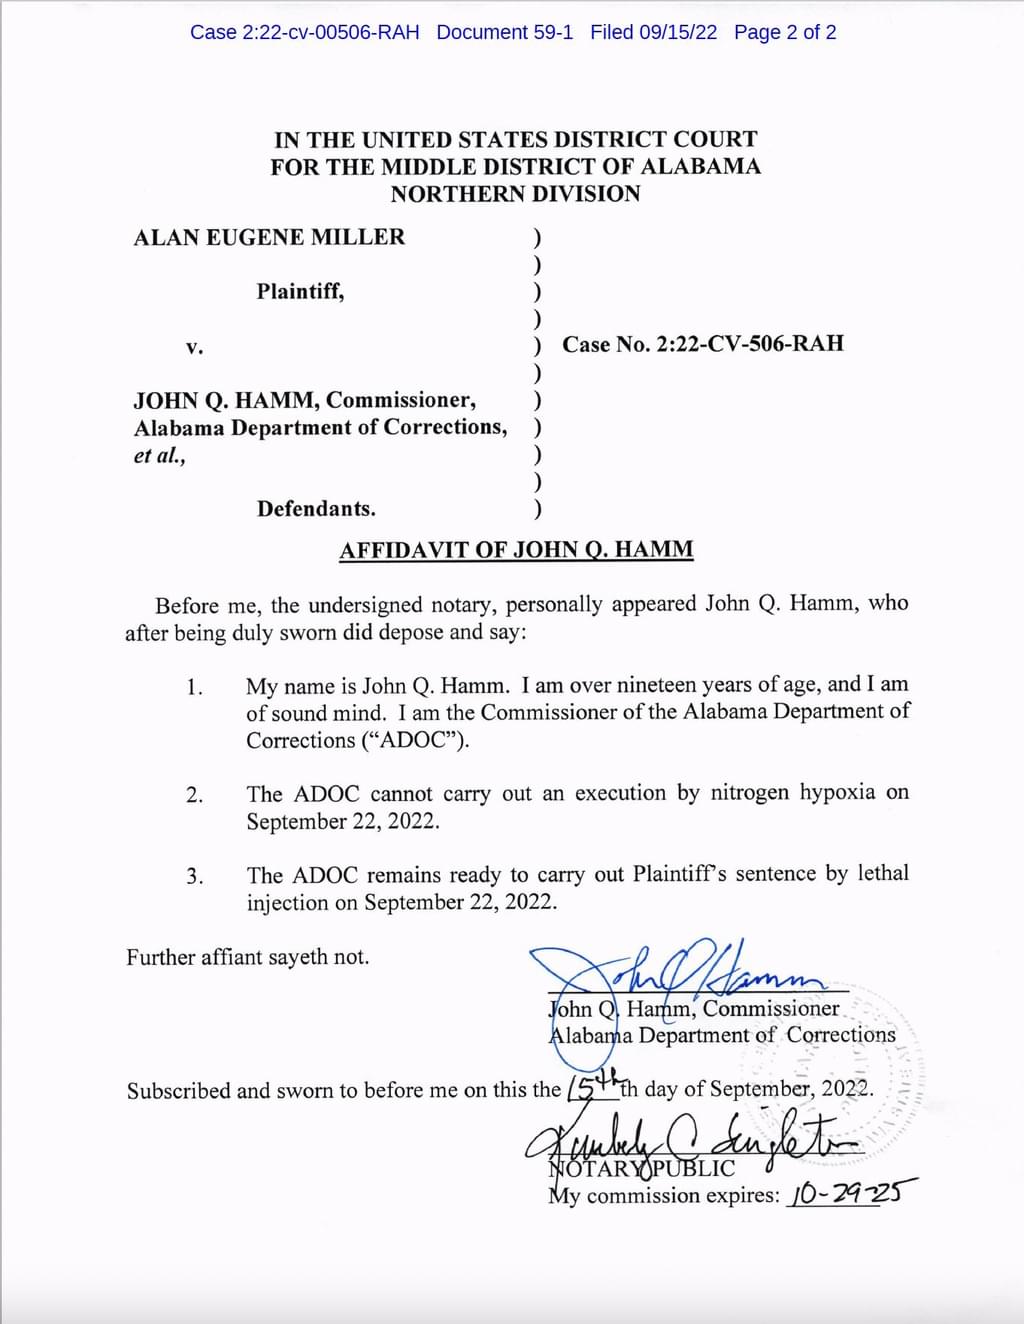 Alabama Prosecutors Float, Then Retreat From, Plan to Execute Alan Miller Using Untested Nitrogen Suffocation Procedure